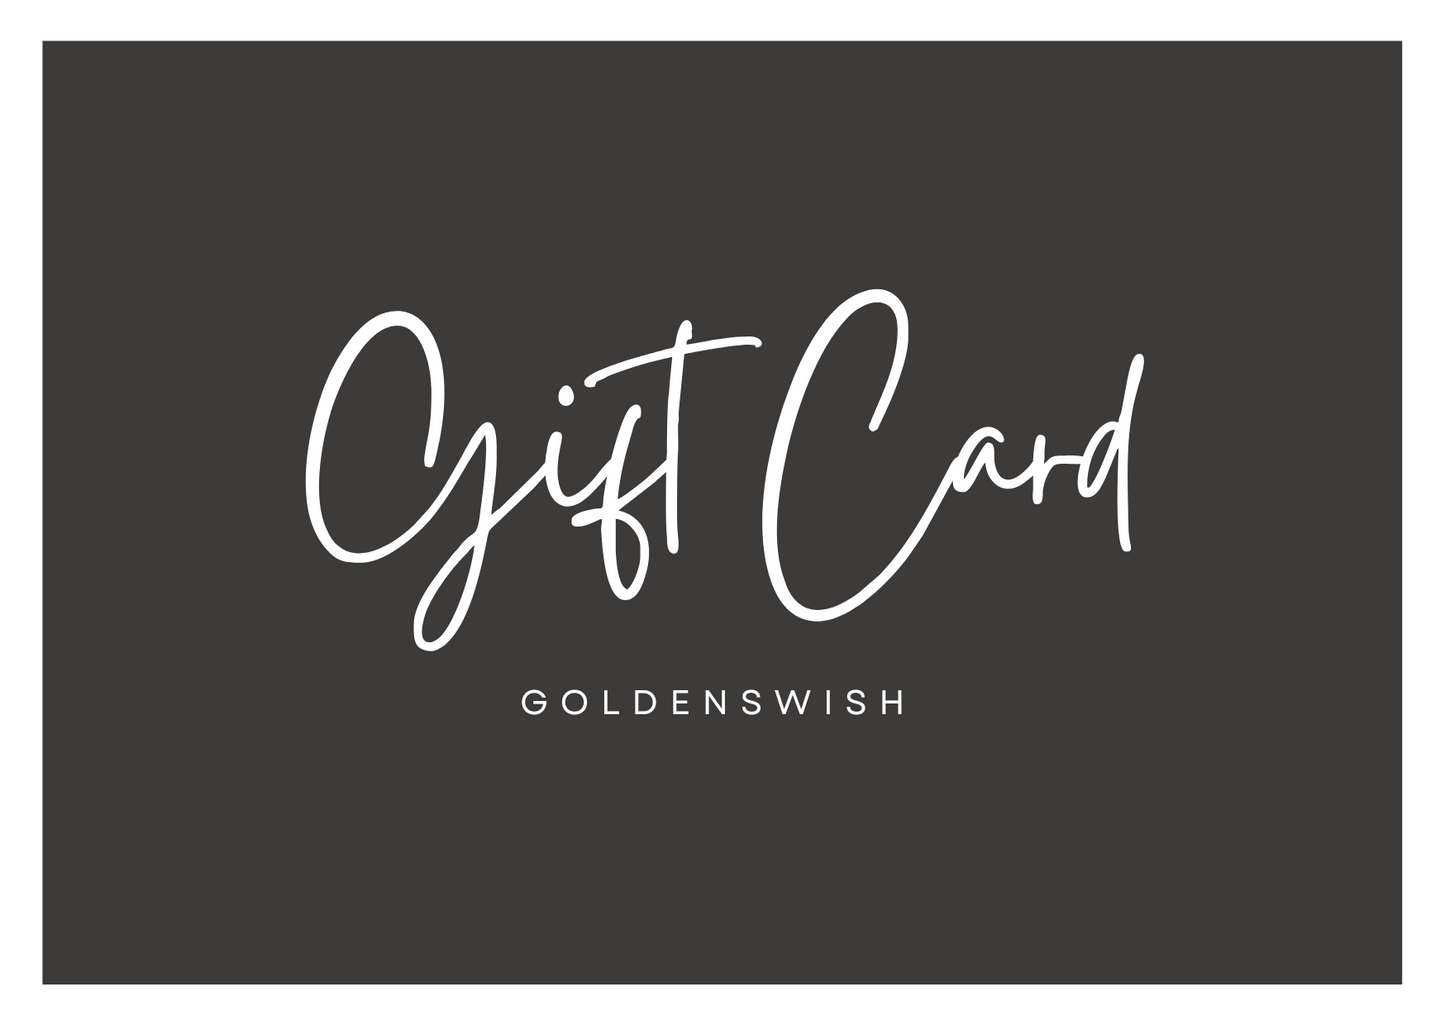 Goldenswish Gift Card